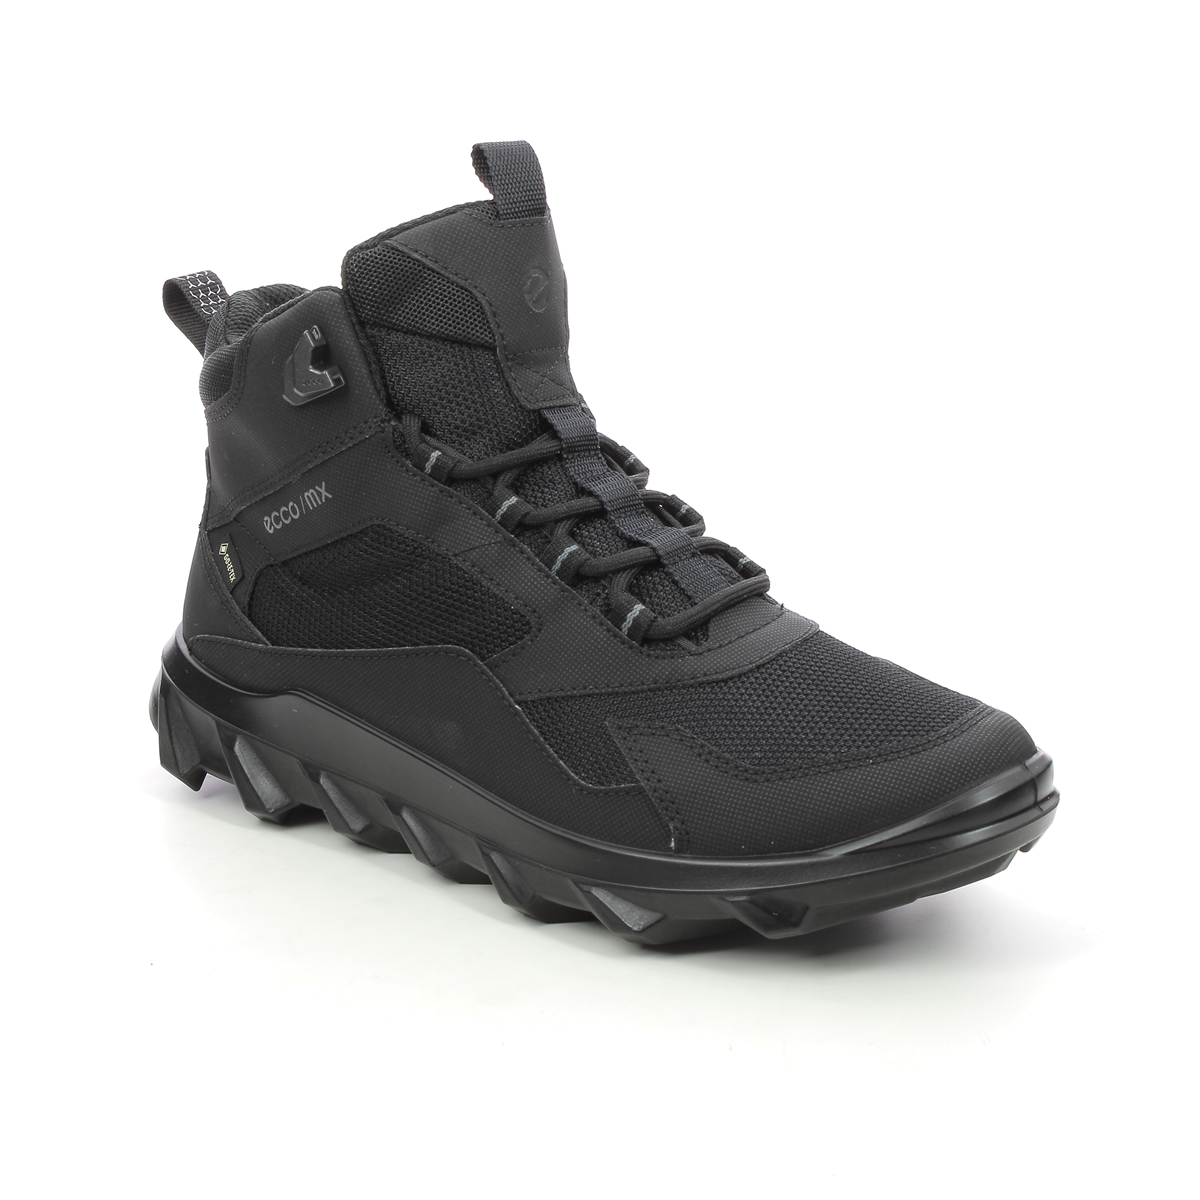 Ecco Mx Boot Gtx W Black Womens Walking Boots 820223-51052 In Size 41 In Plain Black